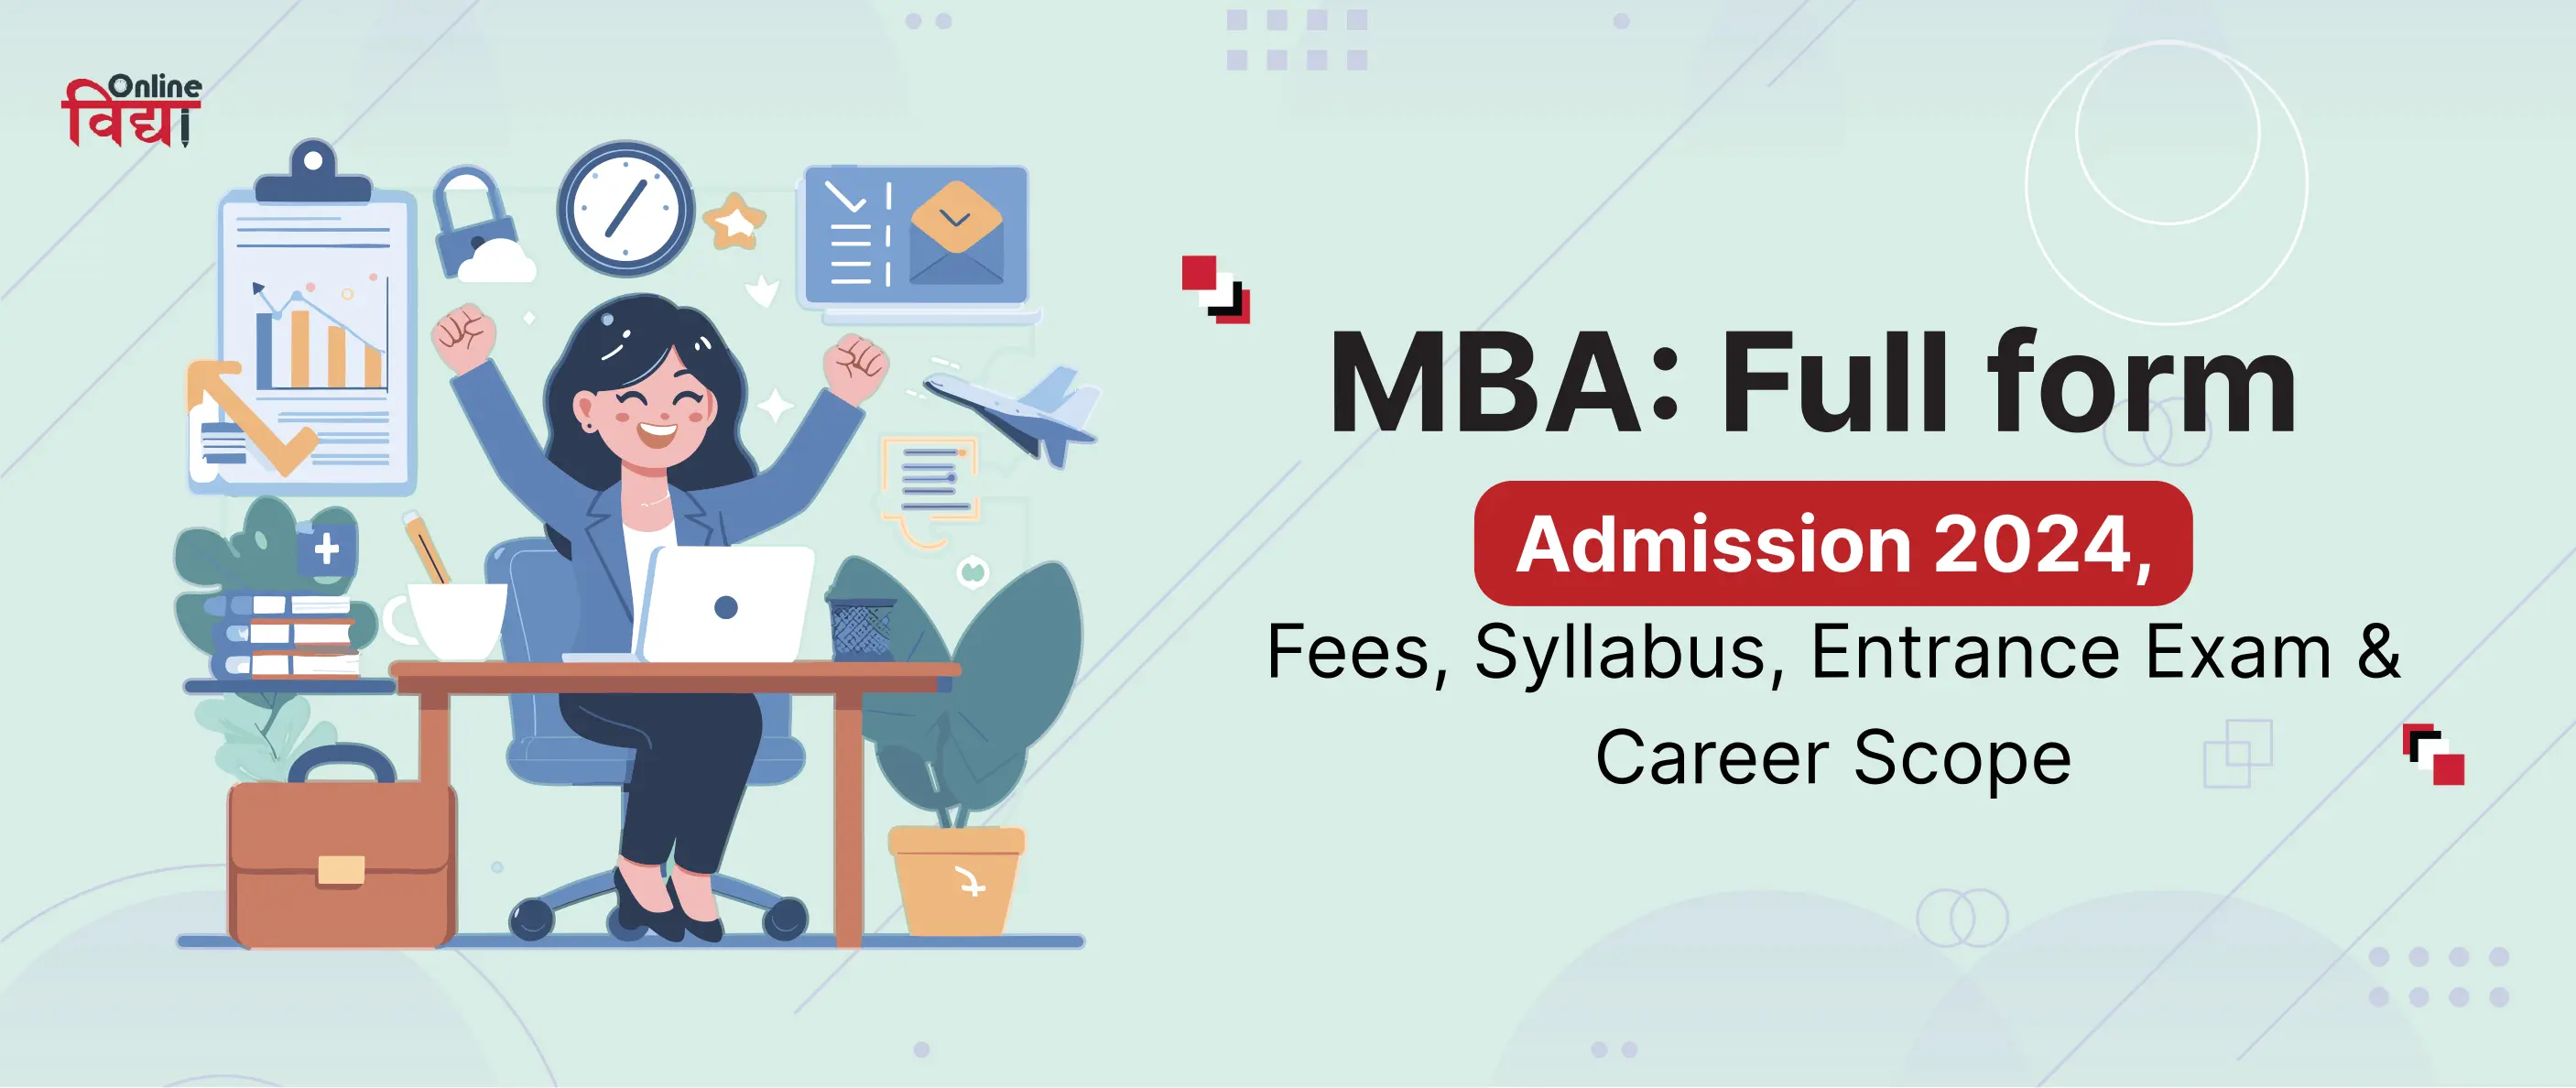 MBA: Full form, Admission 2024, Fees, Syllabus, Entrance Exam & Career Scope